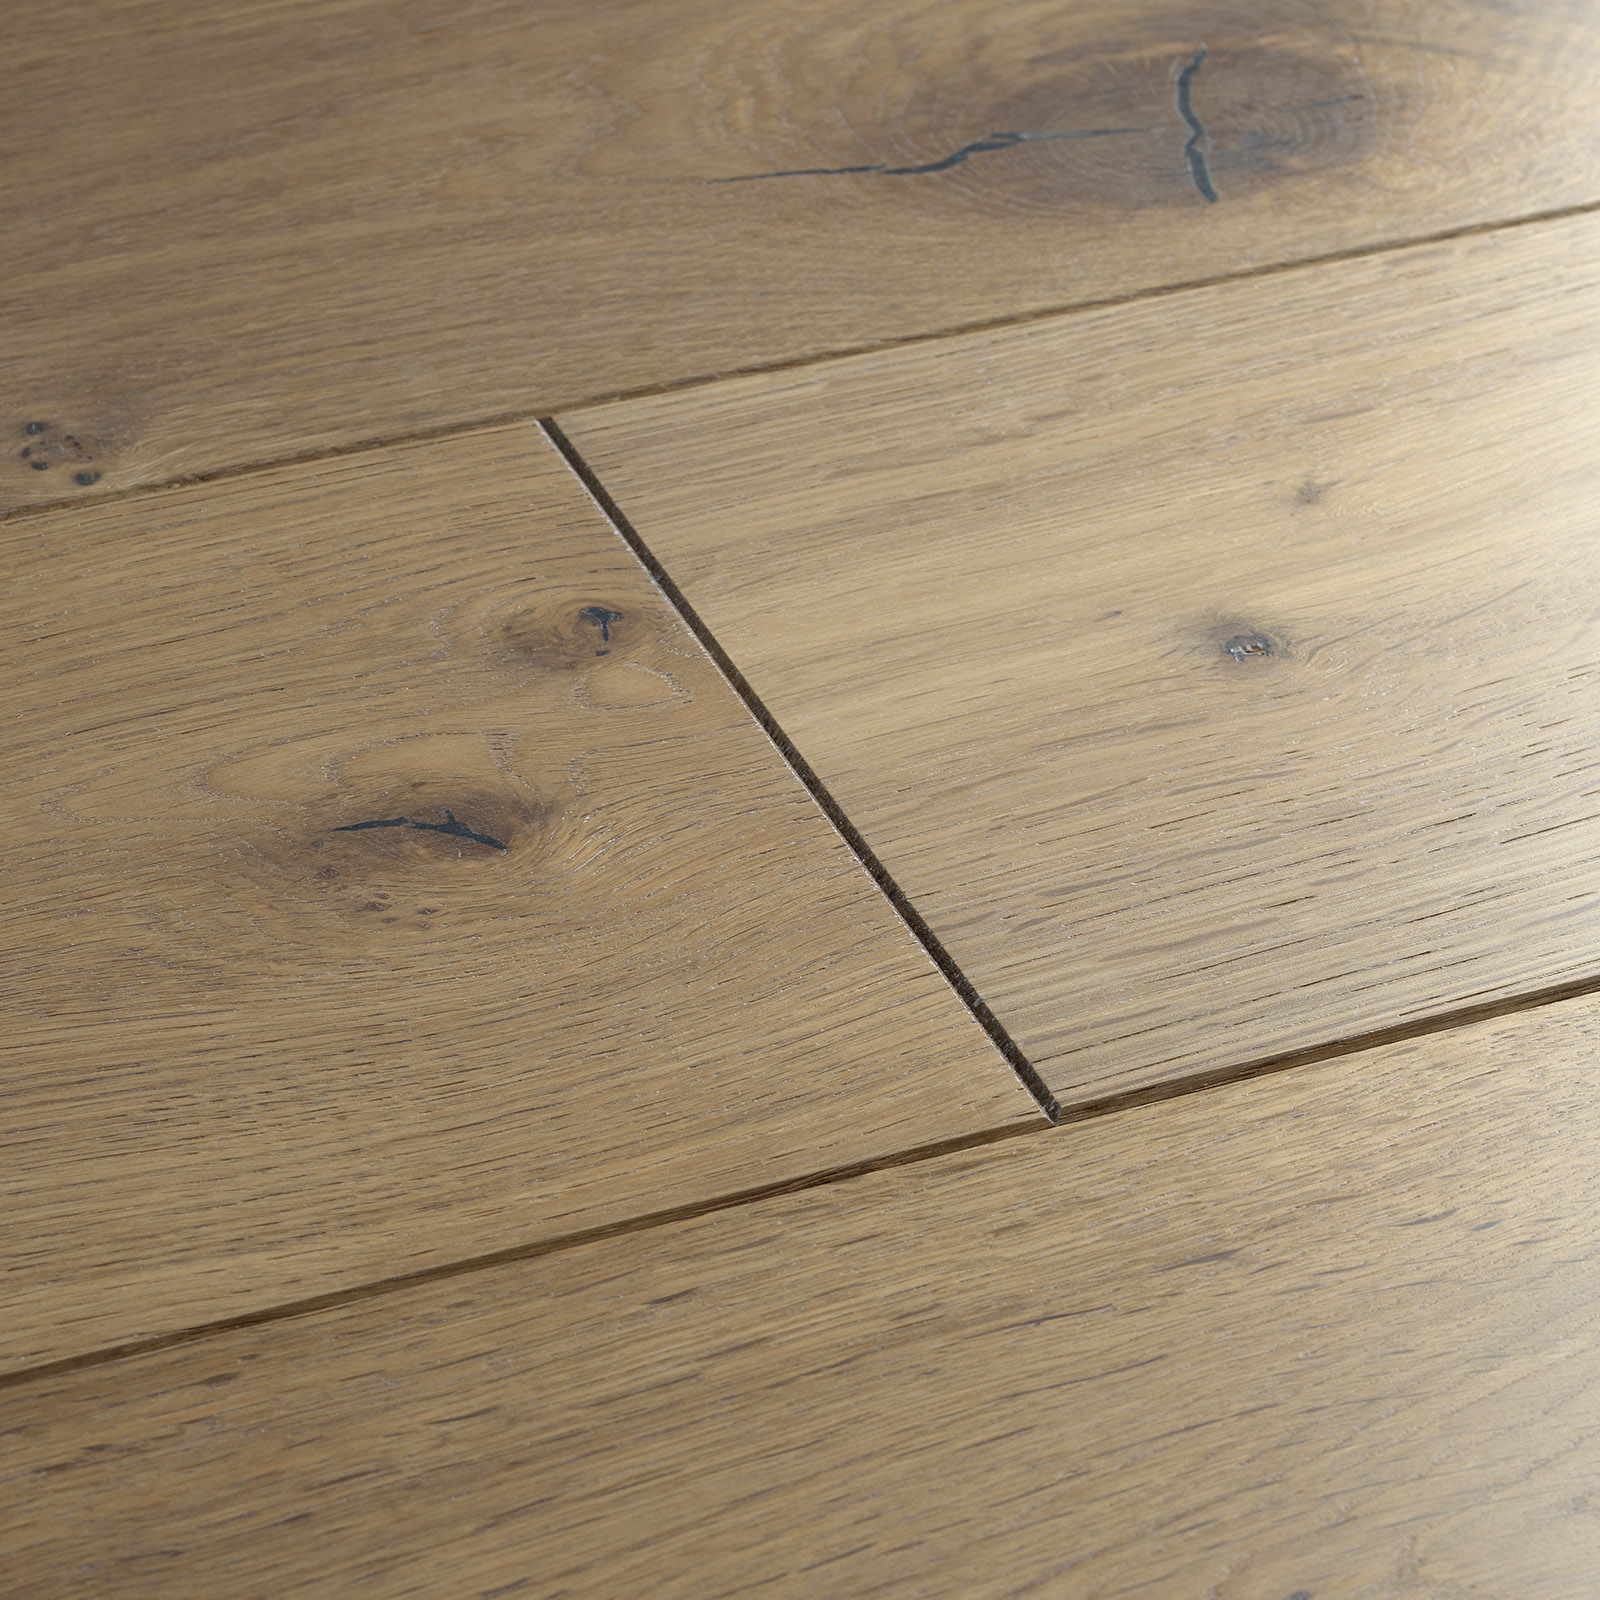 Chepstow Washed Oak Wood, Hardwood Flooring With Grey Undertones